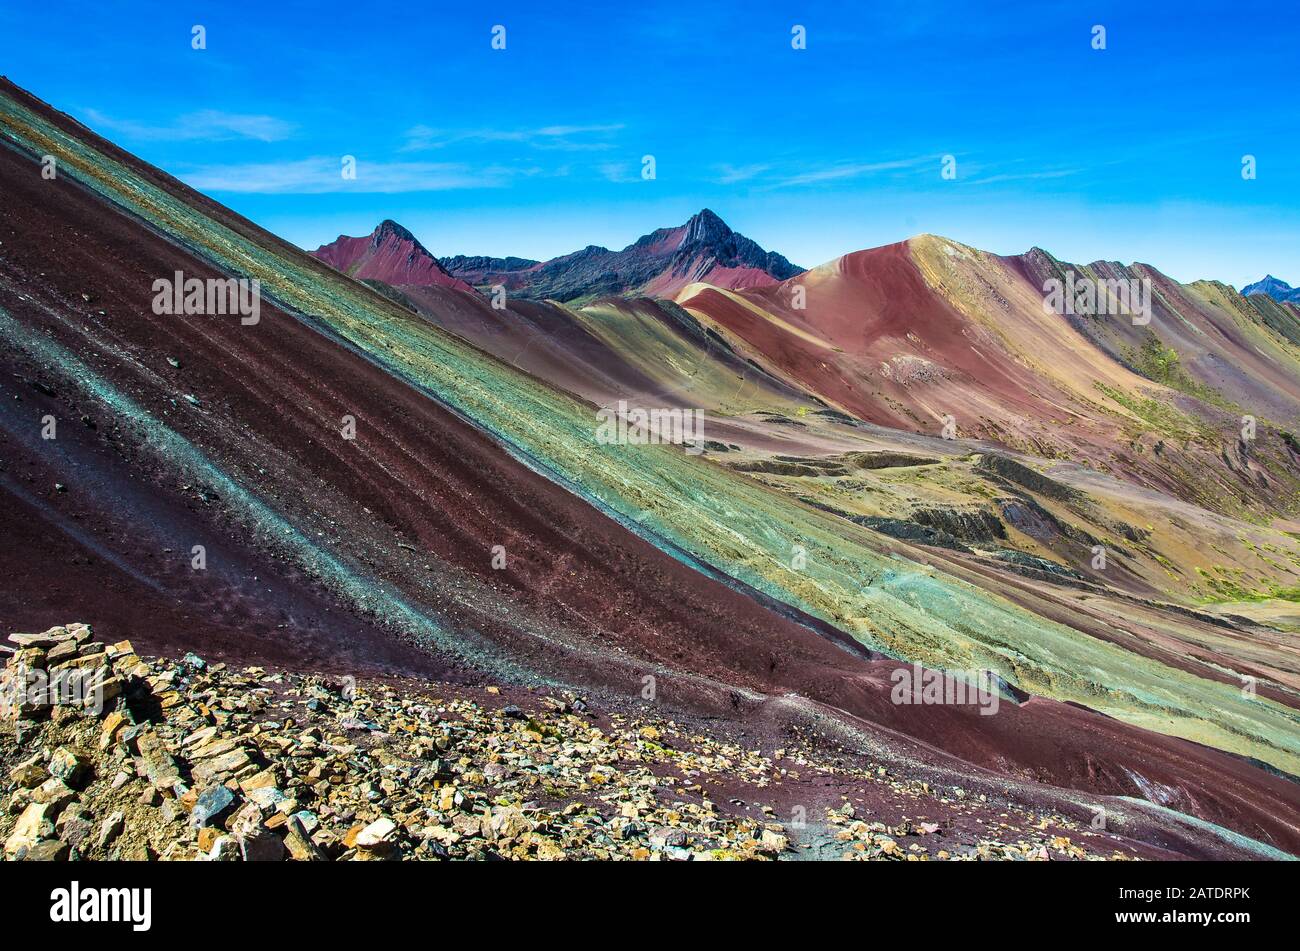 Vinicunca, Peru - Rainbow Mountain (5200 m) in den Anden, Cordillera de los Andes, Region Cusco in Südamerika. Berge Peru Landschaft Stockfoto